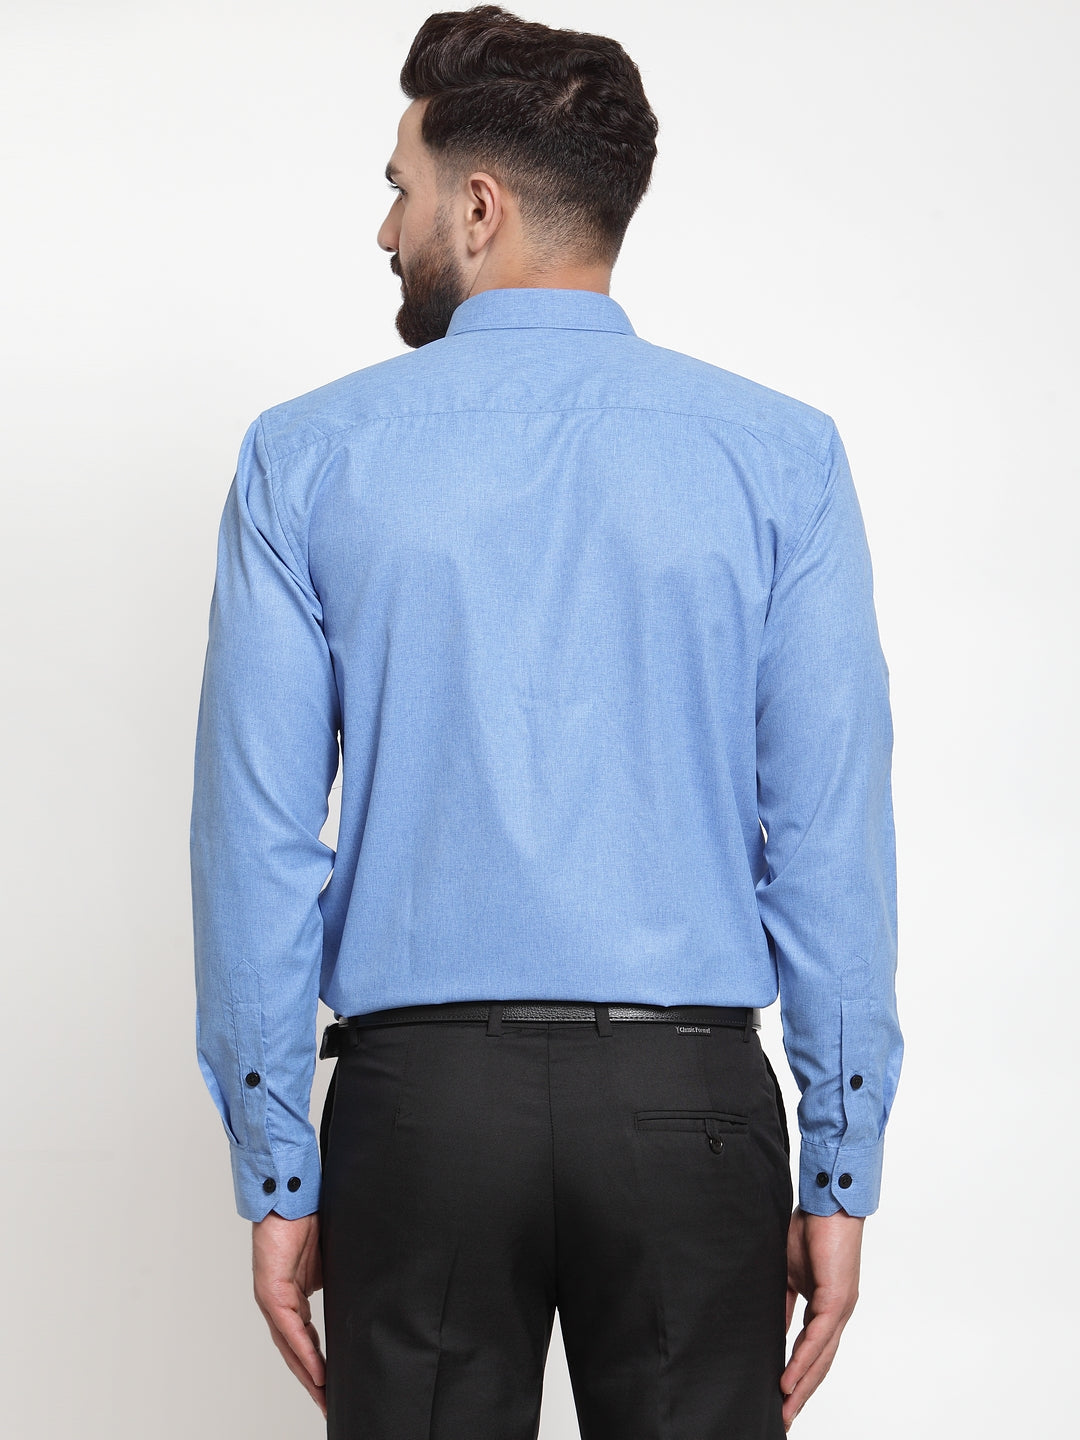 Men's Blue Cotton Solid Button Down Formal Shirts ( SF 734Light-Blue ) - Jainish